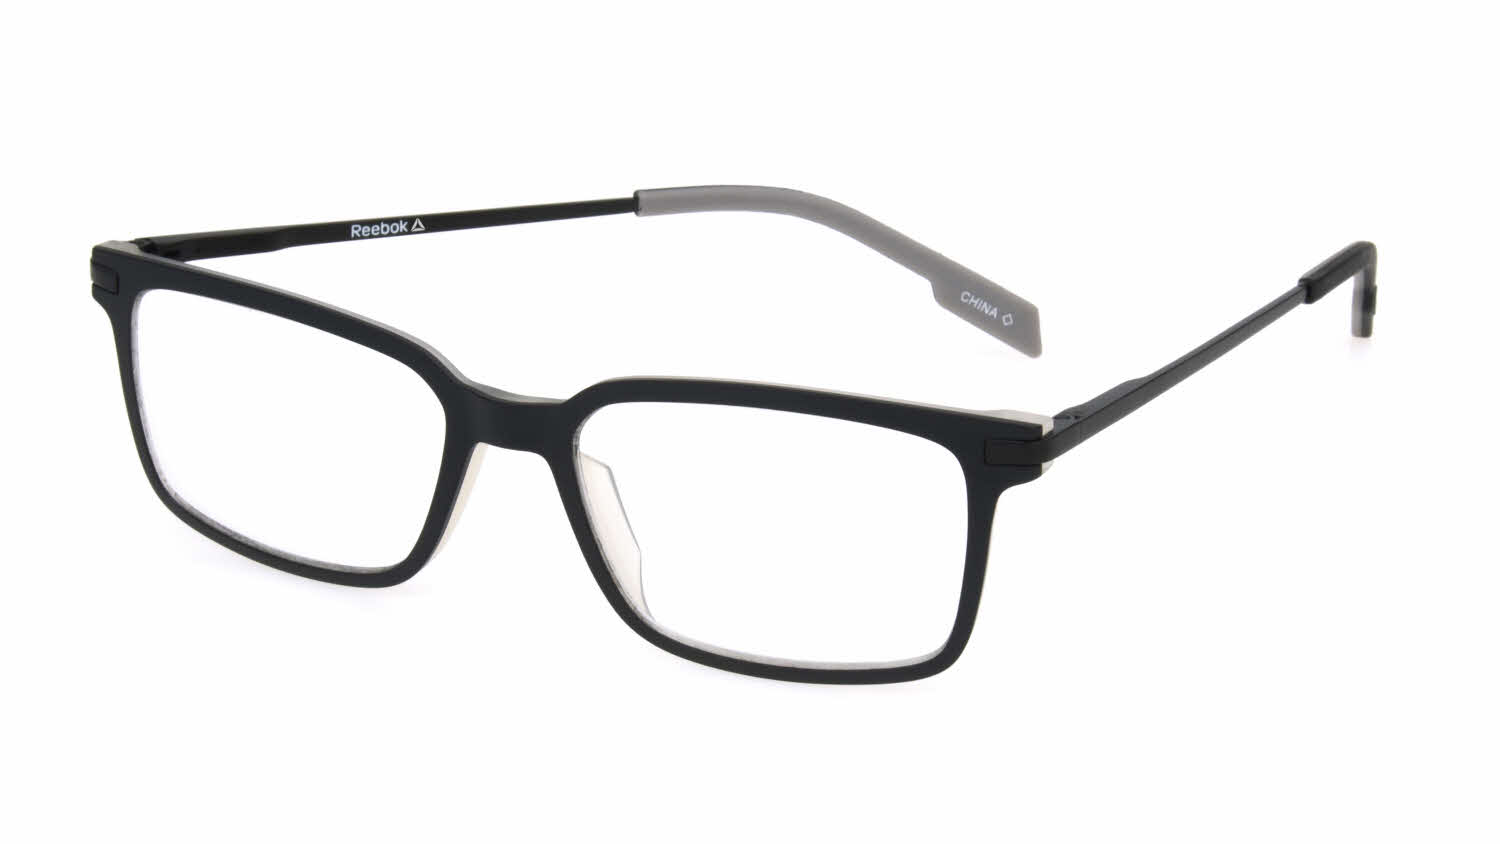 Reebok R9009 Eyeglasses